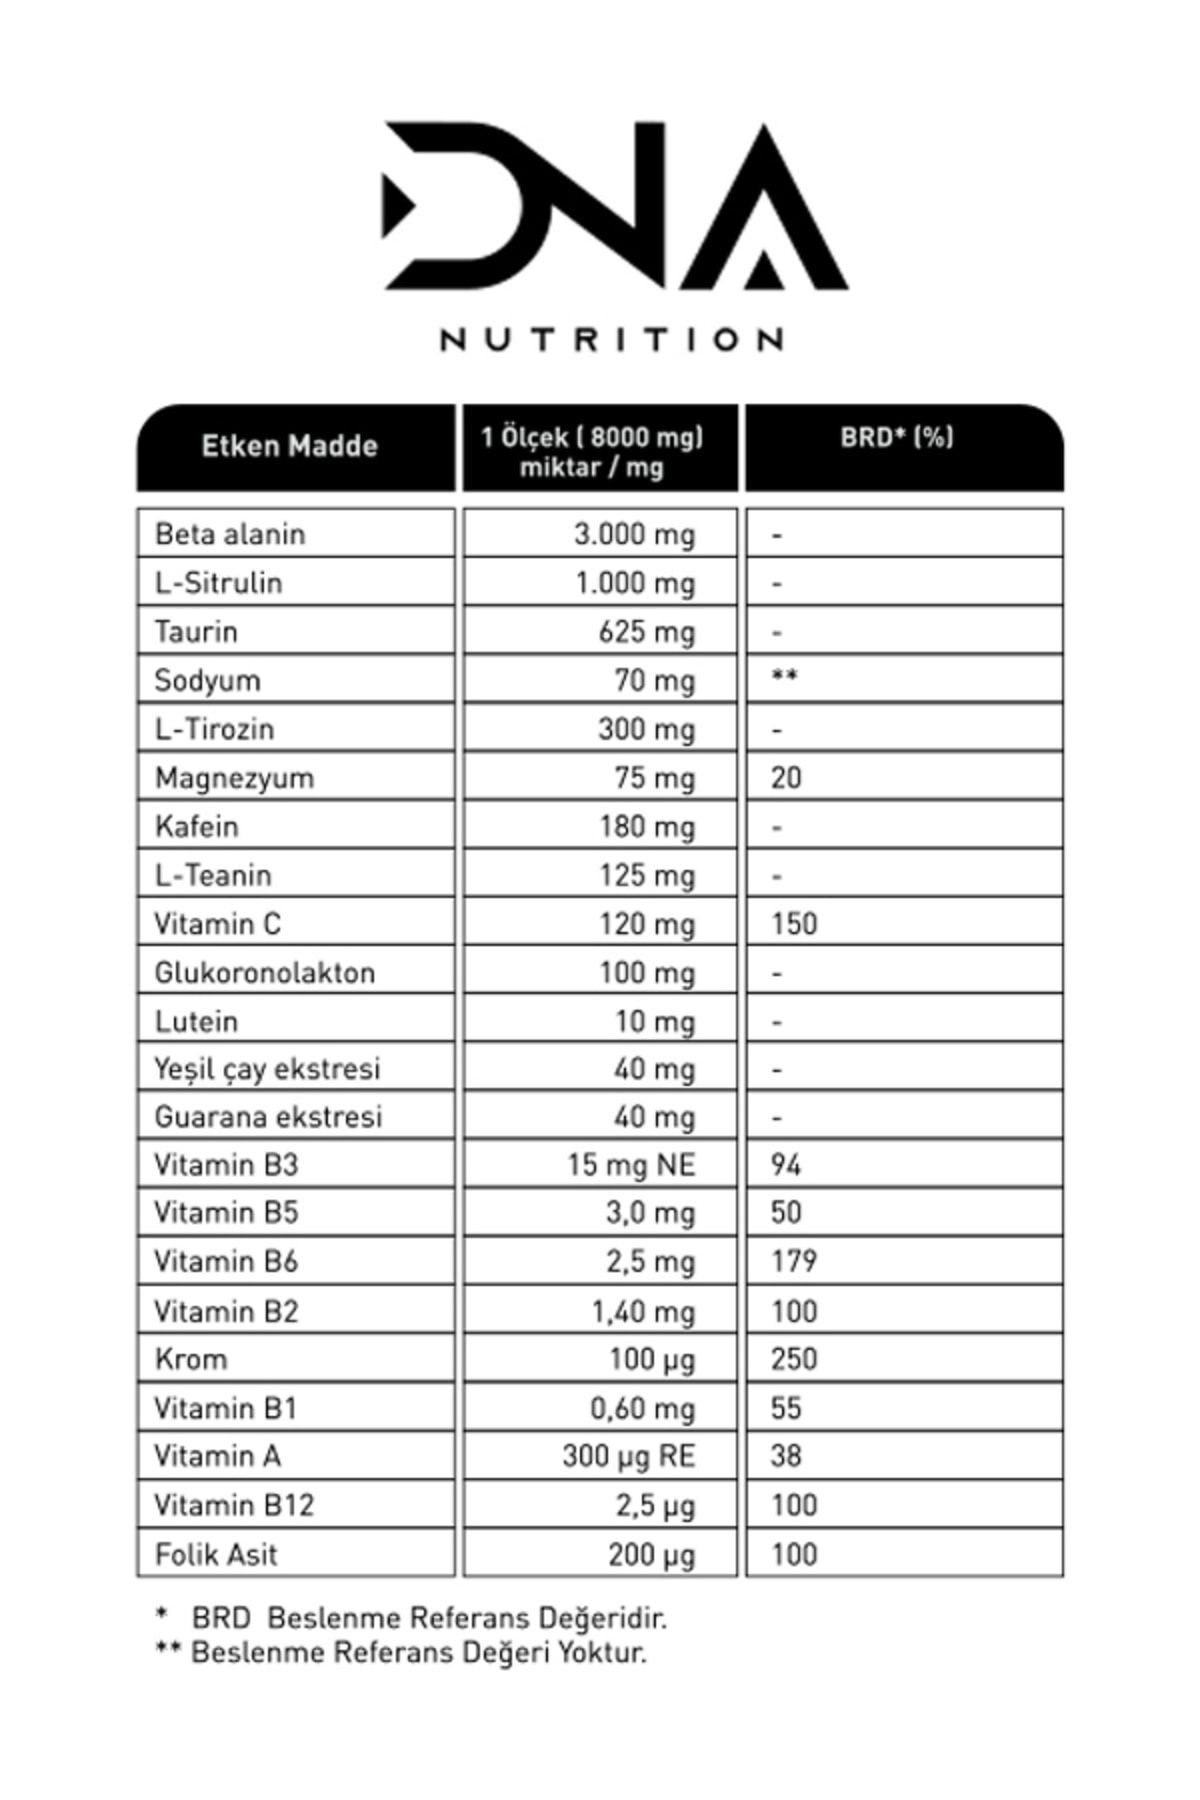 Dna Nutrition Big Pmp Pre-workout 240gr Tropik Meyve Aromalı